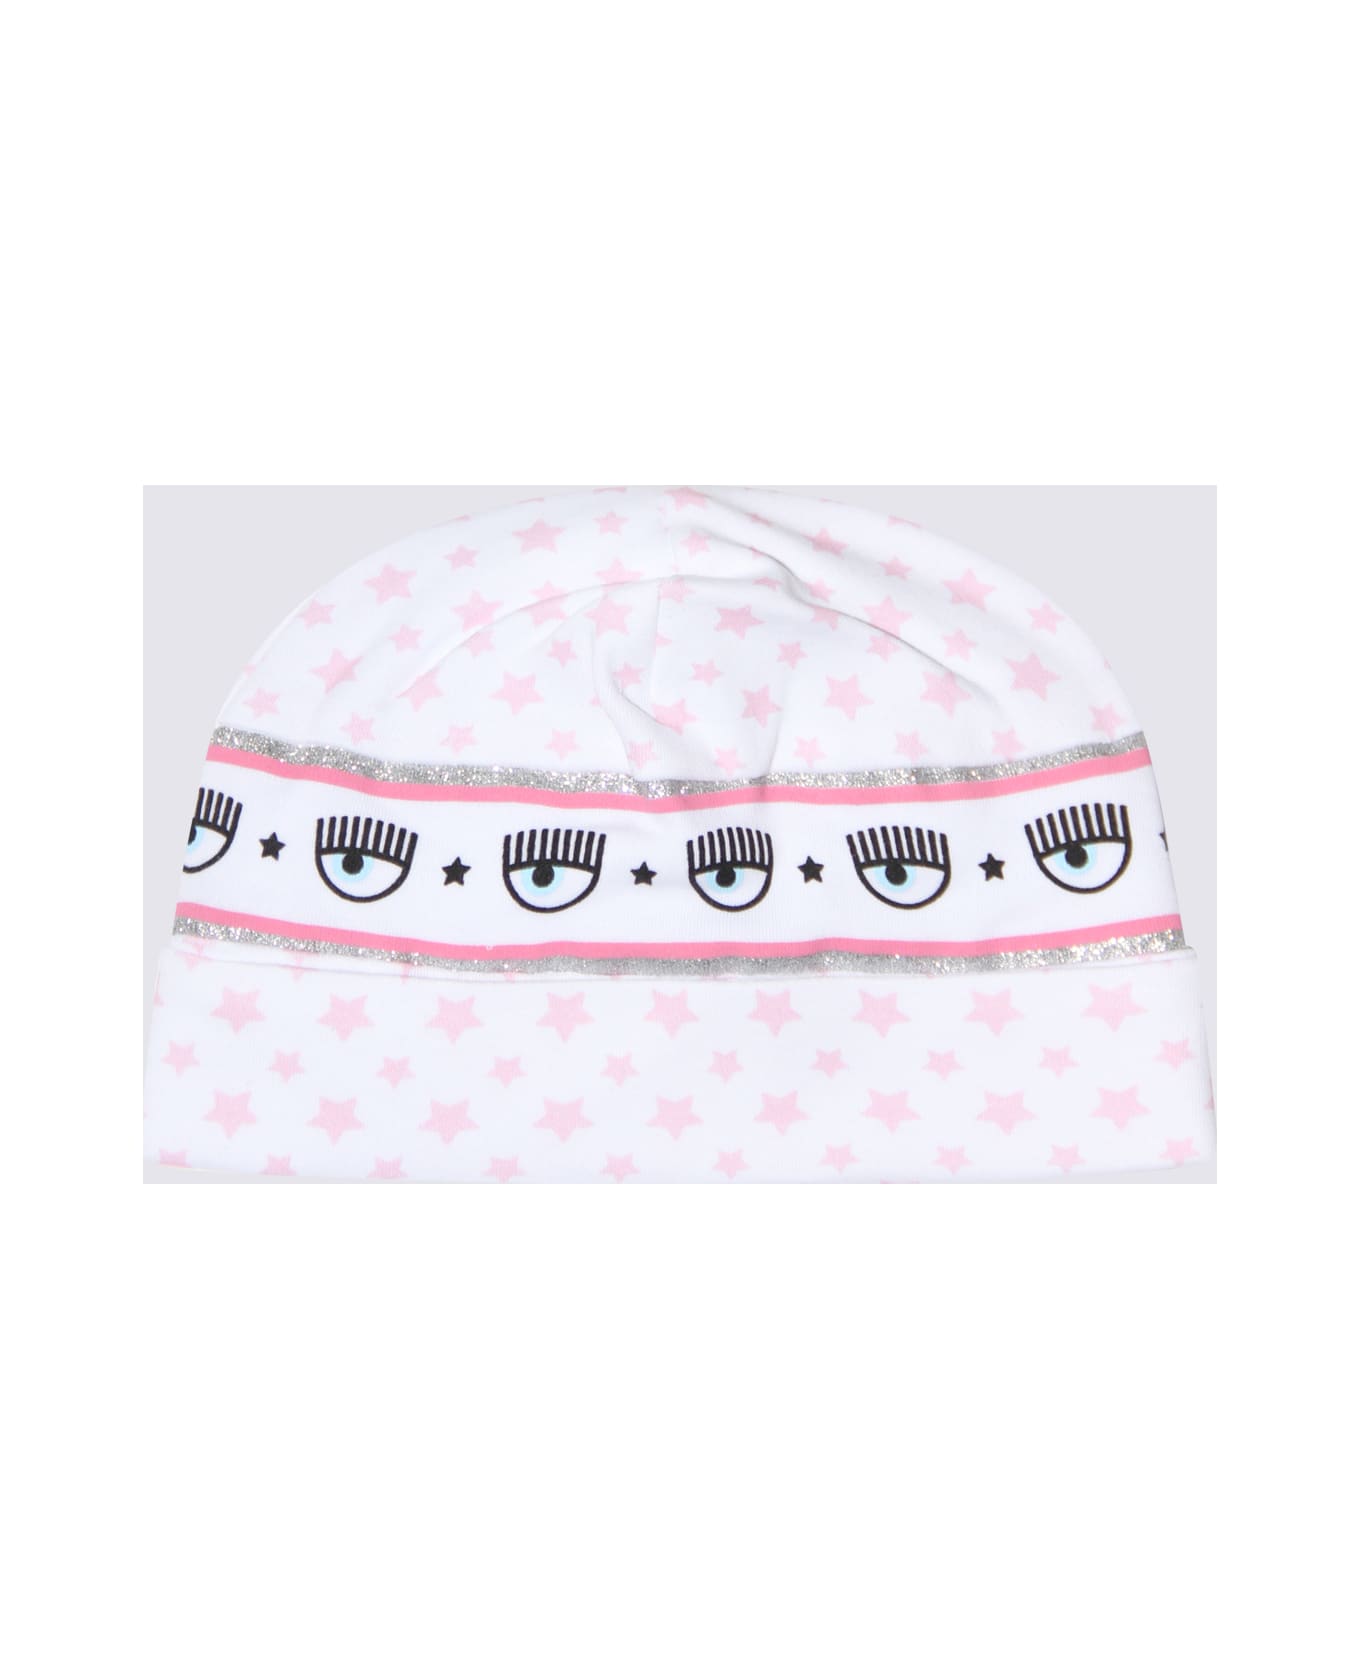 Chiara Ferragni White And Pink Fairytale Cotton Eyestar Beanie Hat - Bianco+Rosa Fairytale